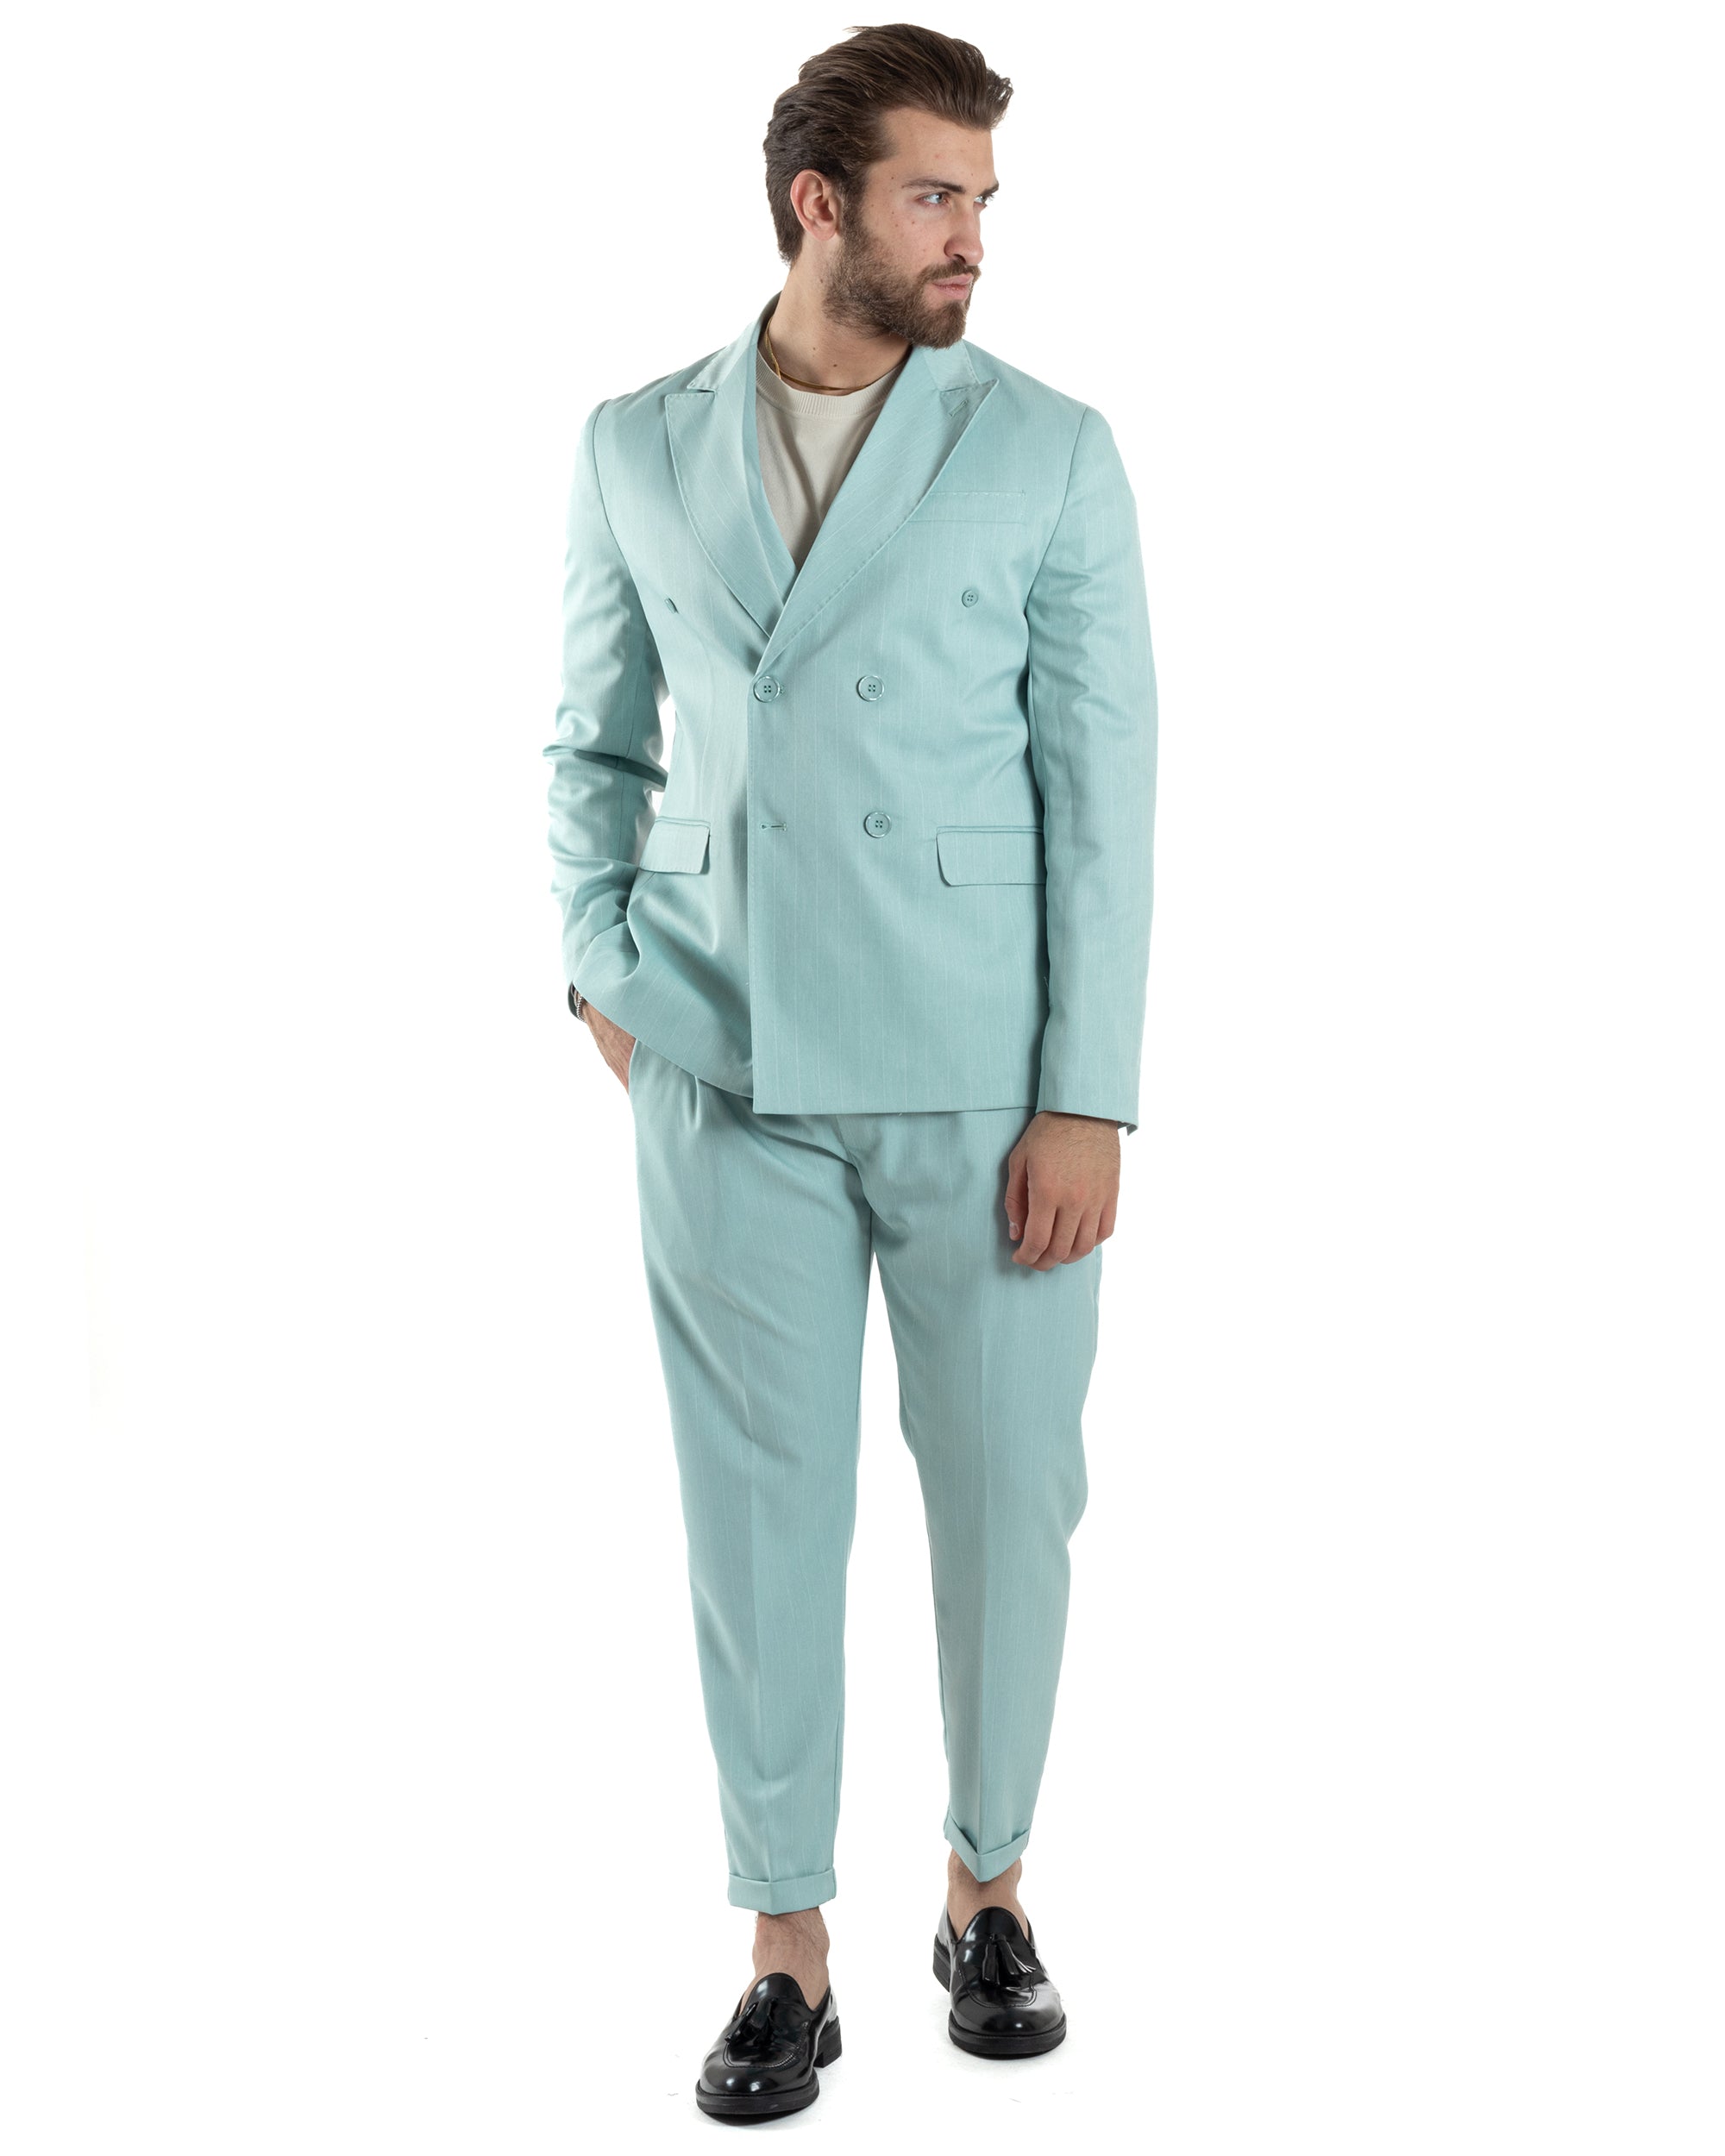 Double-Breasted Men's Suit Suit Jacket Pants Beige Pinstripe Elegant Casual GIOSAL-OU2403A